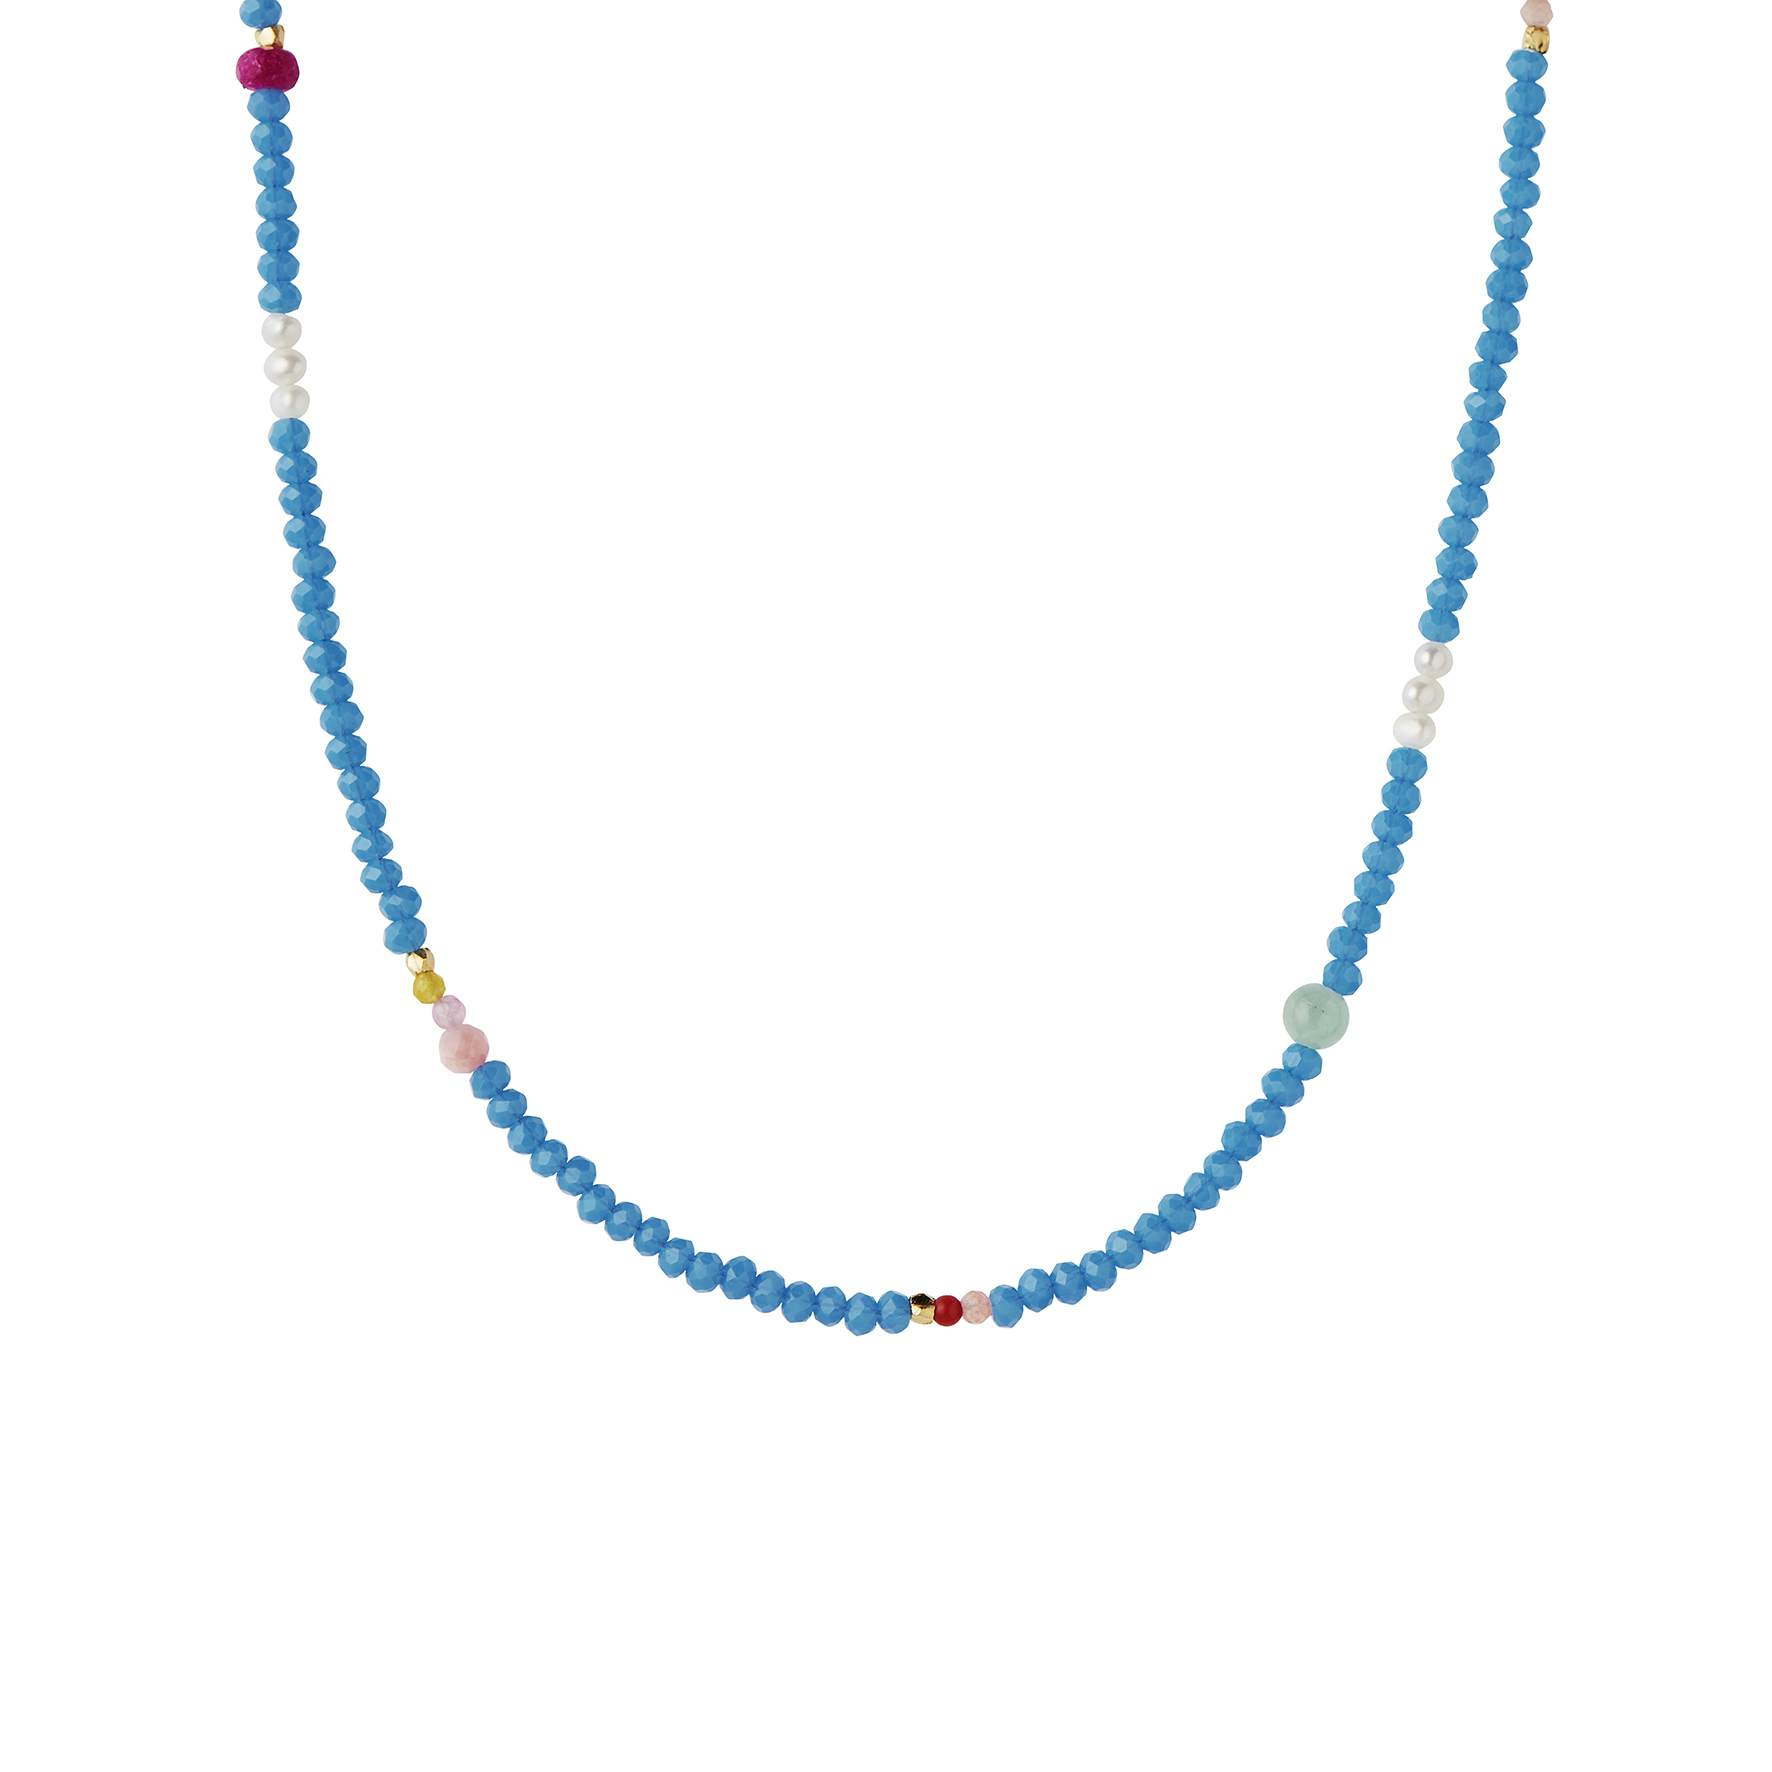 Color Crush Necklace - Santorini Mix fra STINE A Jewelry i Forgylt-Sølv Sterling 925